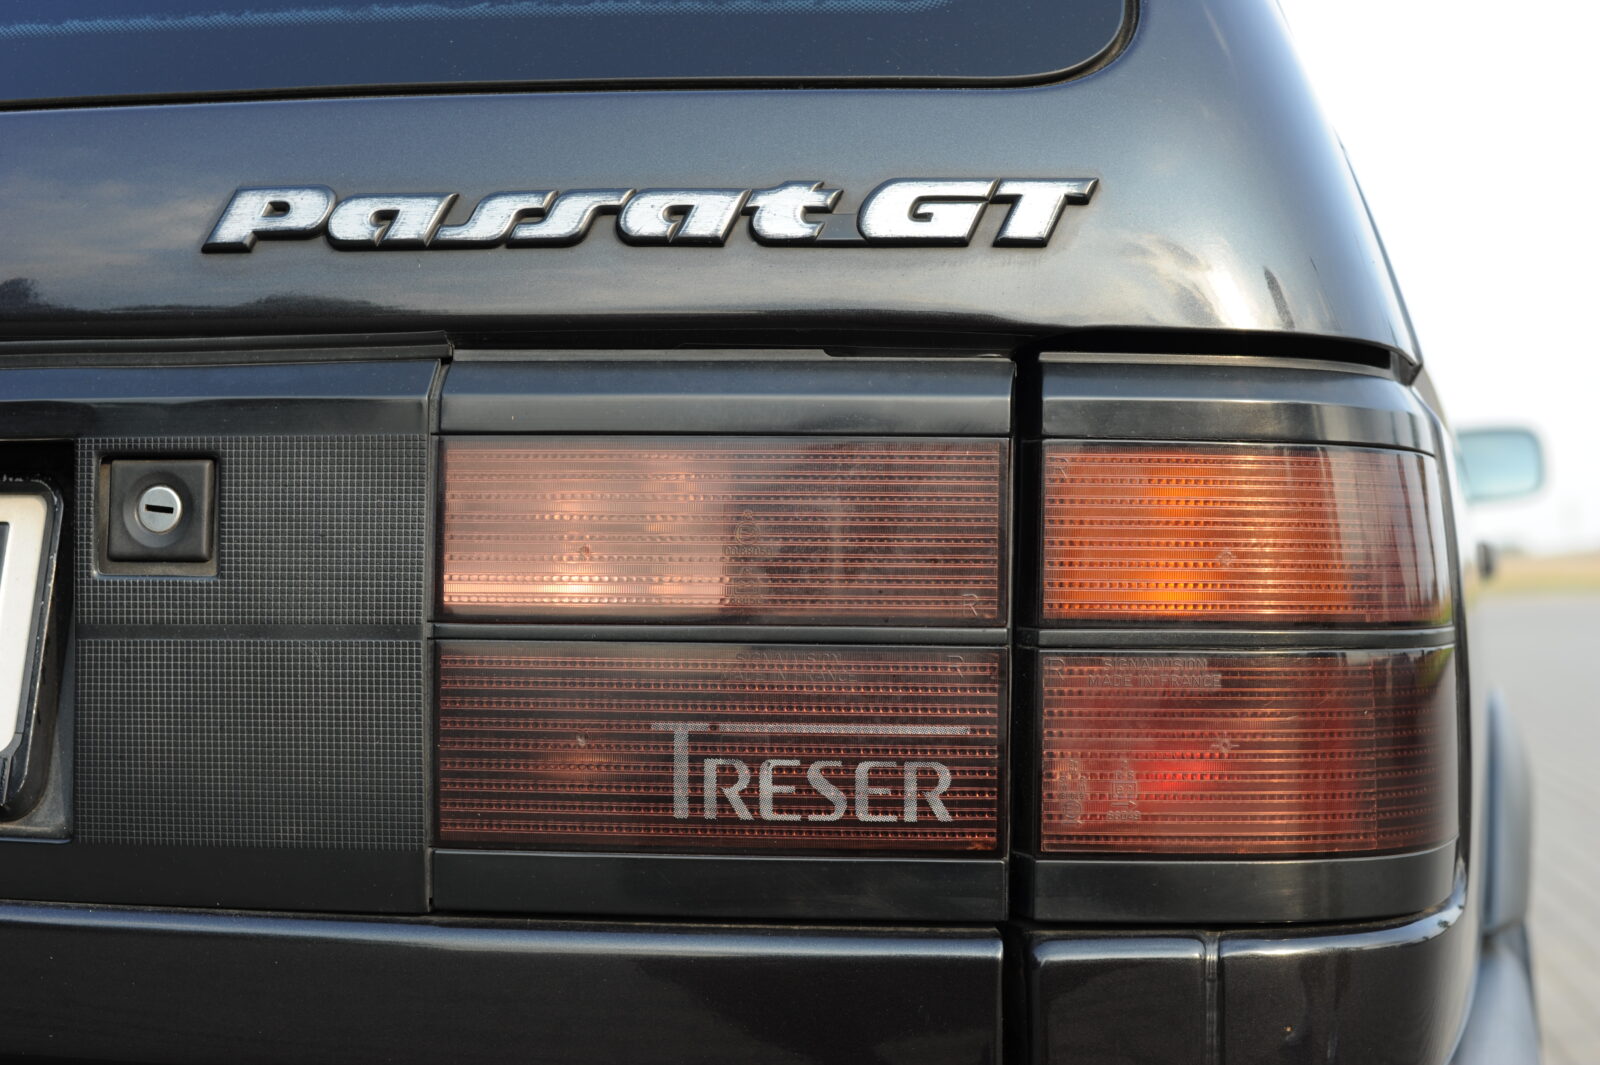 Tuning VW Passata B3 Variant GT tylne światła i napis Passat GT